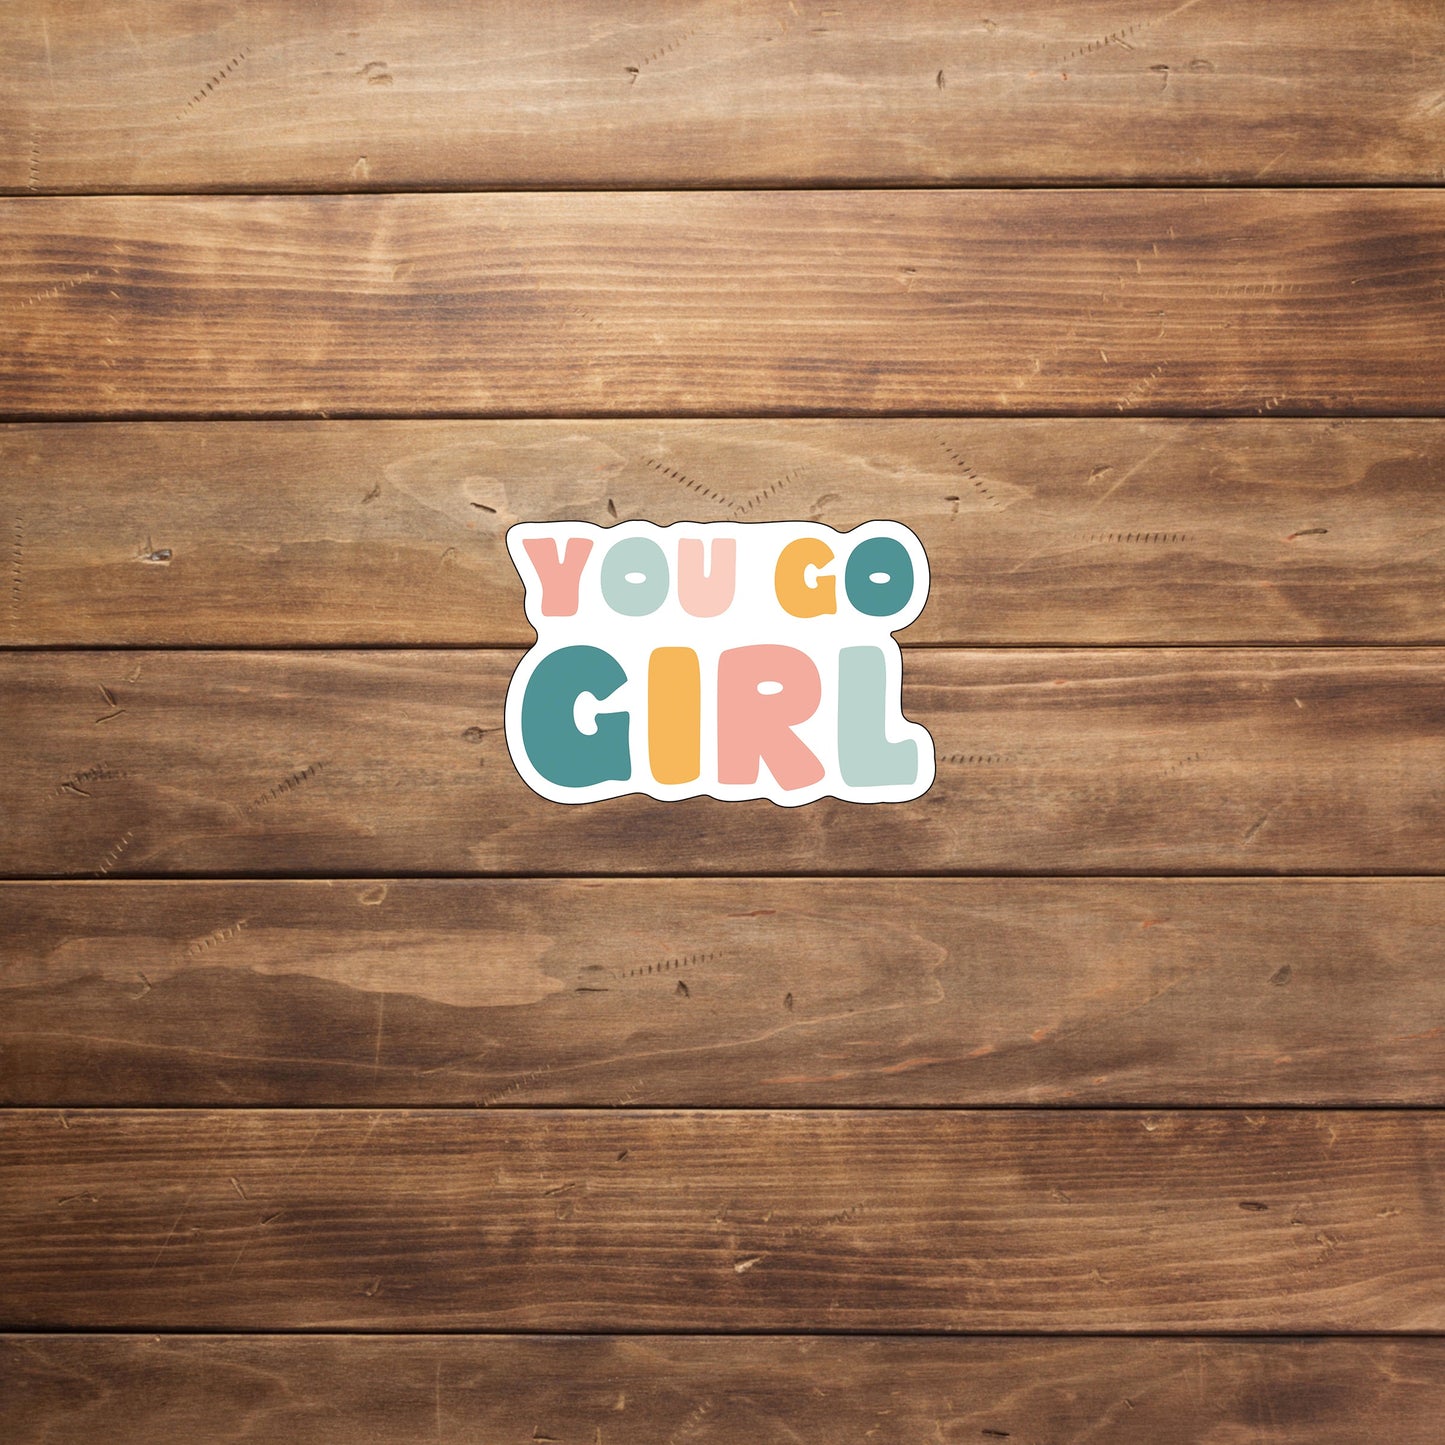 You go girl Sticker